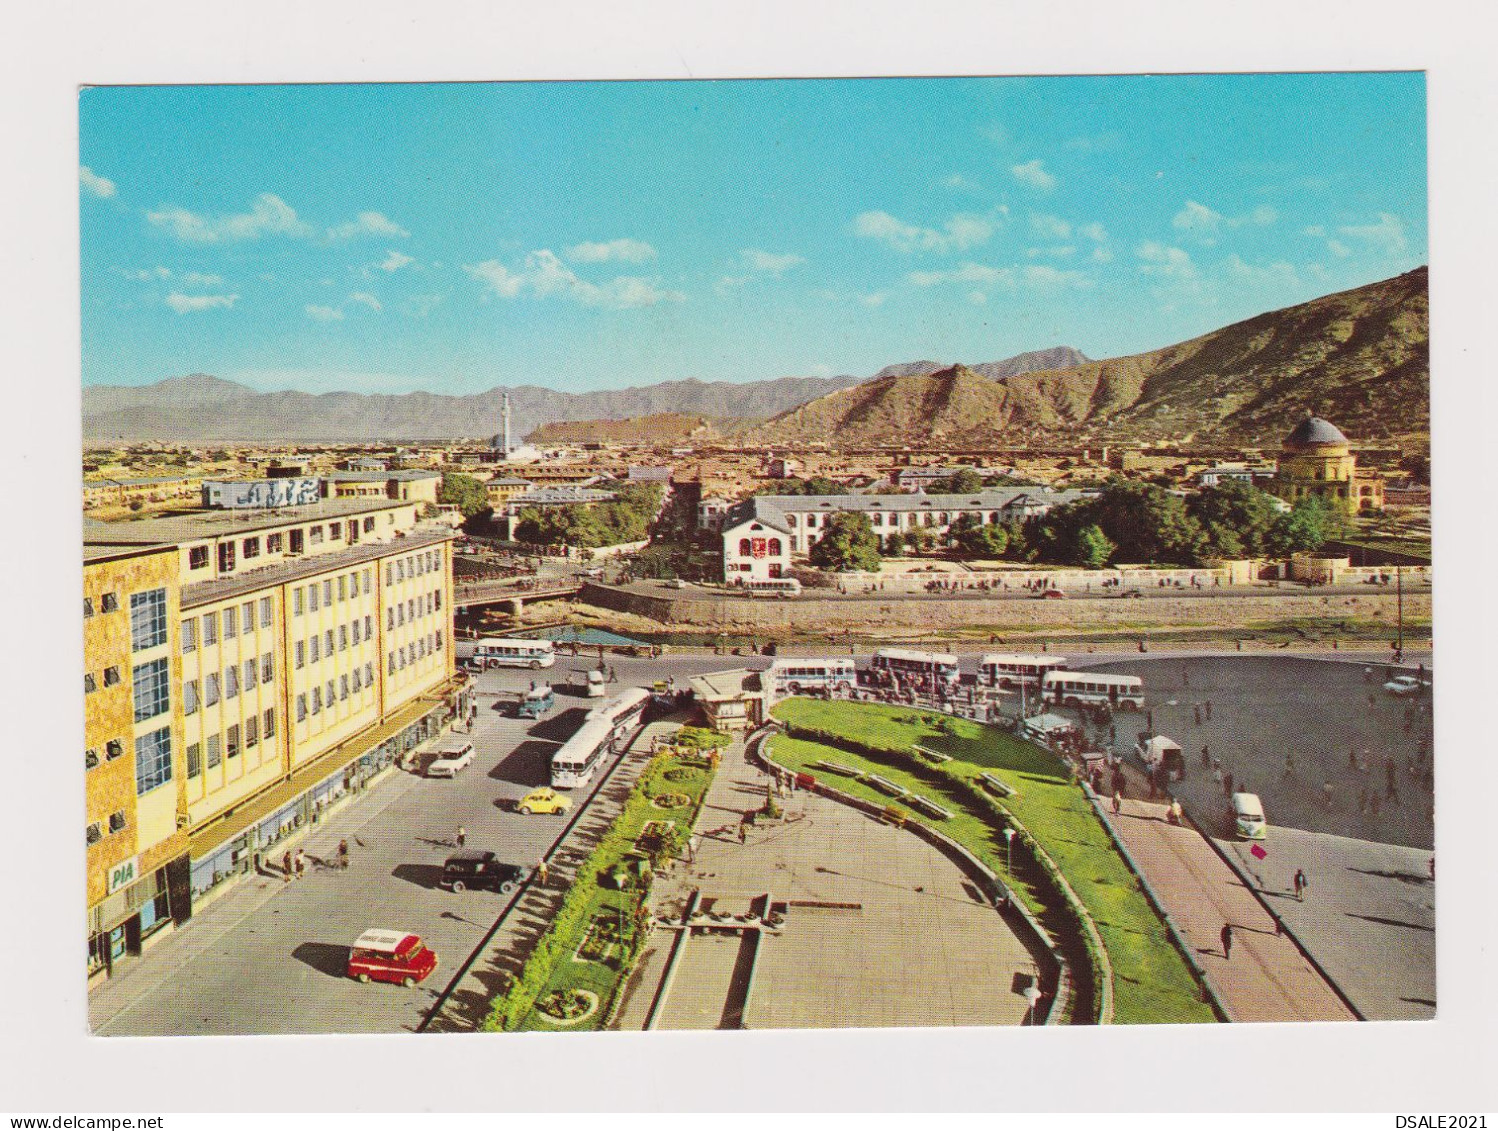 Afghanistan KABUL MOHD. JAN KHAN WATT KABUL View, Street, Old Cars, Bus, Vintage Photo Postcard RPPc AK (1284) - Afganistán